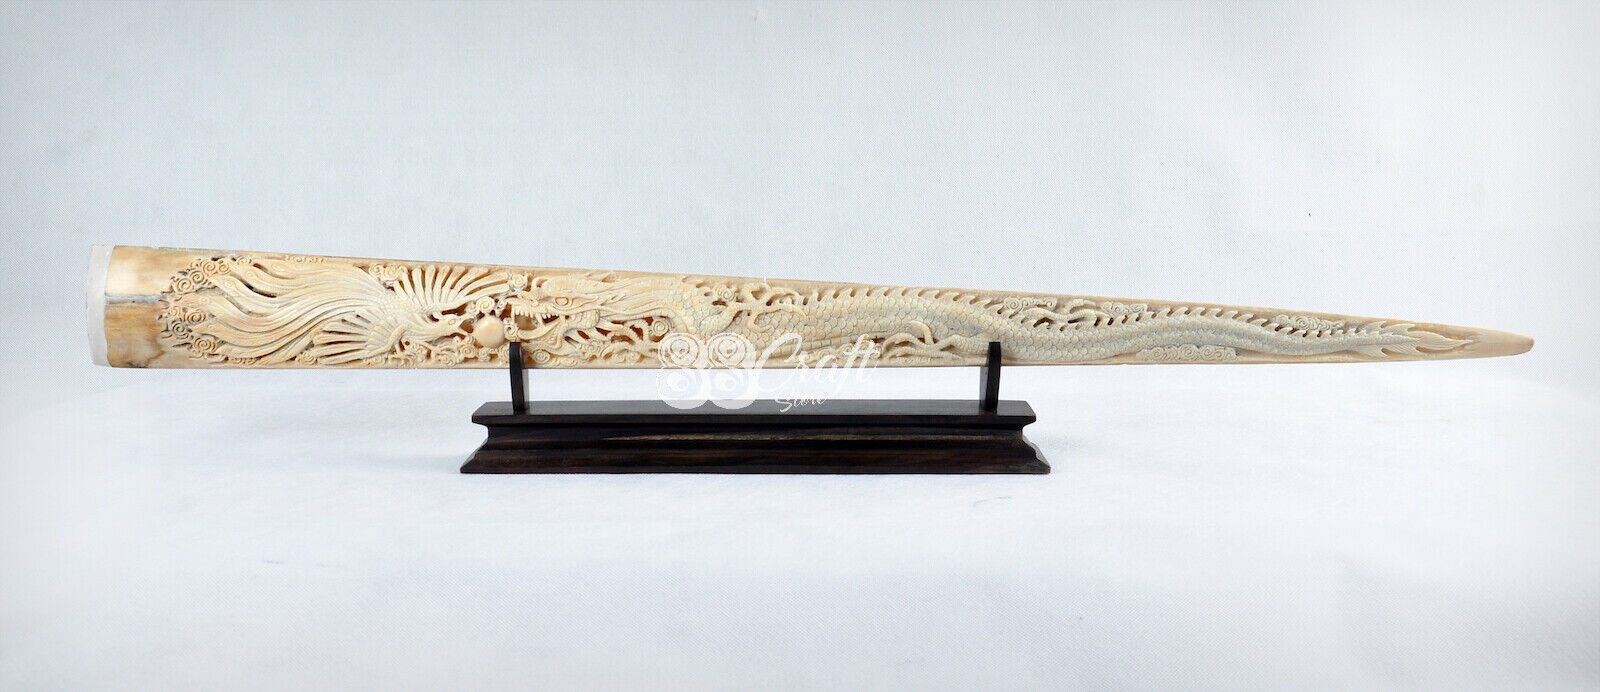 Swordfish Bill Real Marlin Bone Carved Handmade Antique Phoenix Dragon 30\'\'